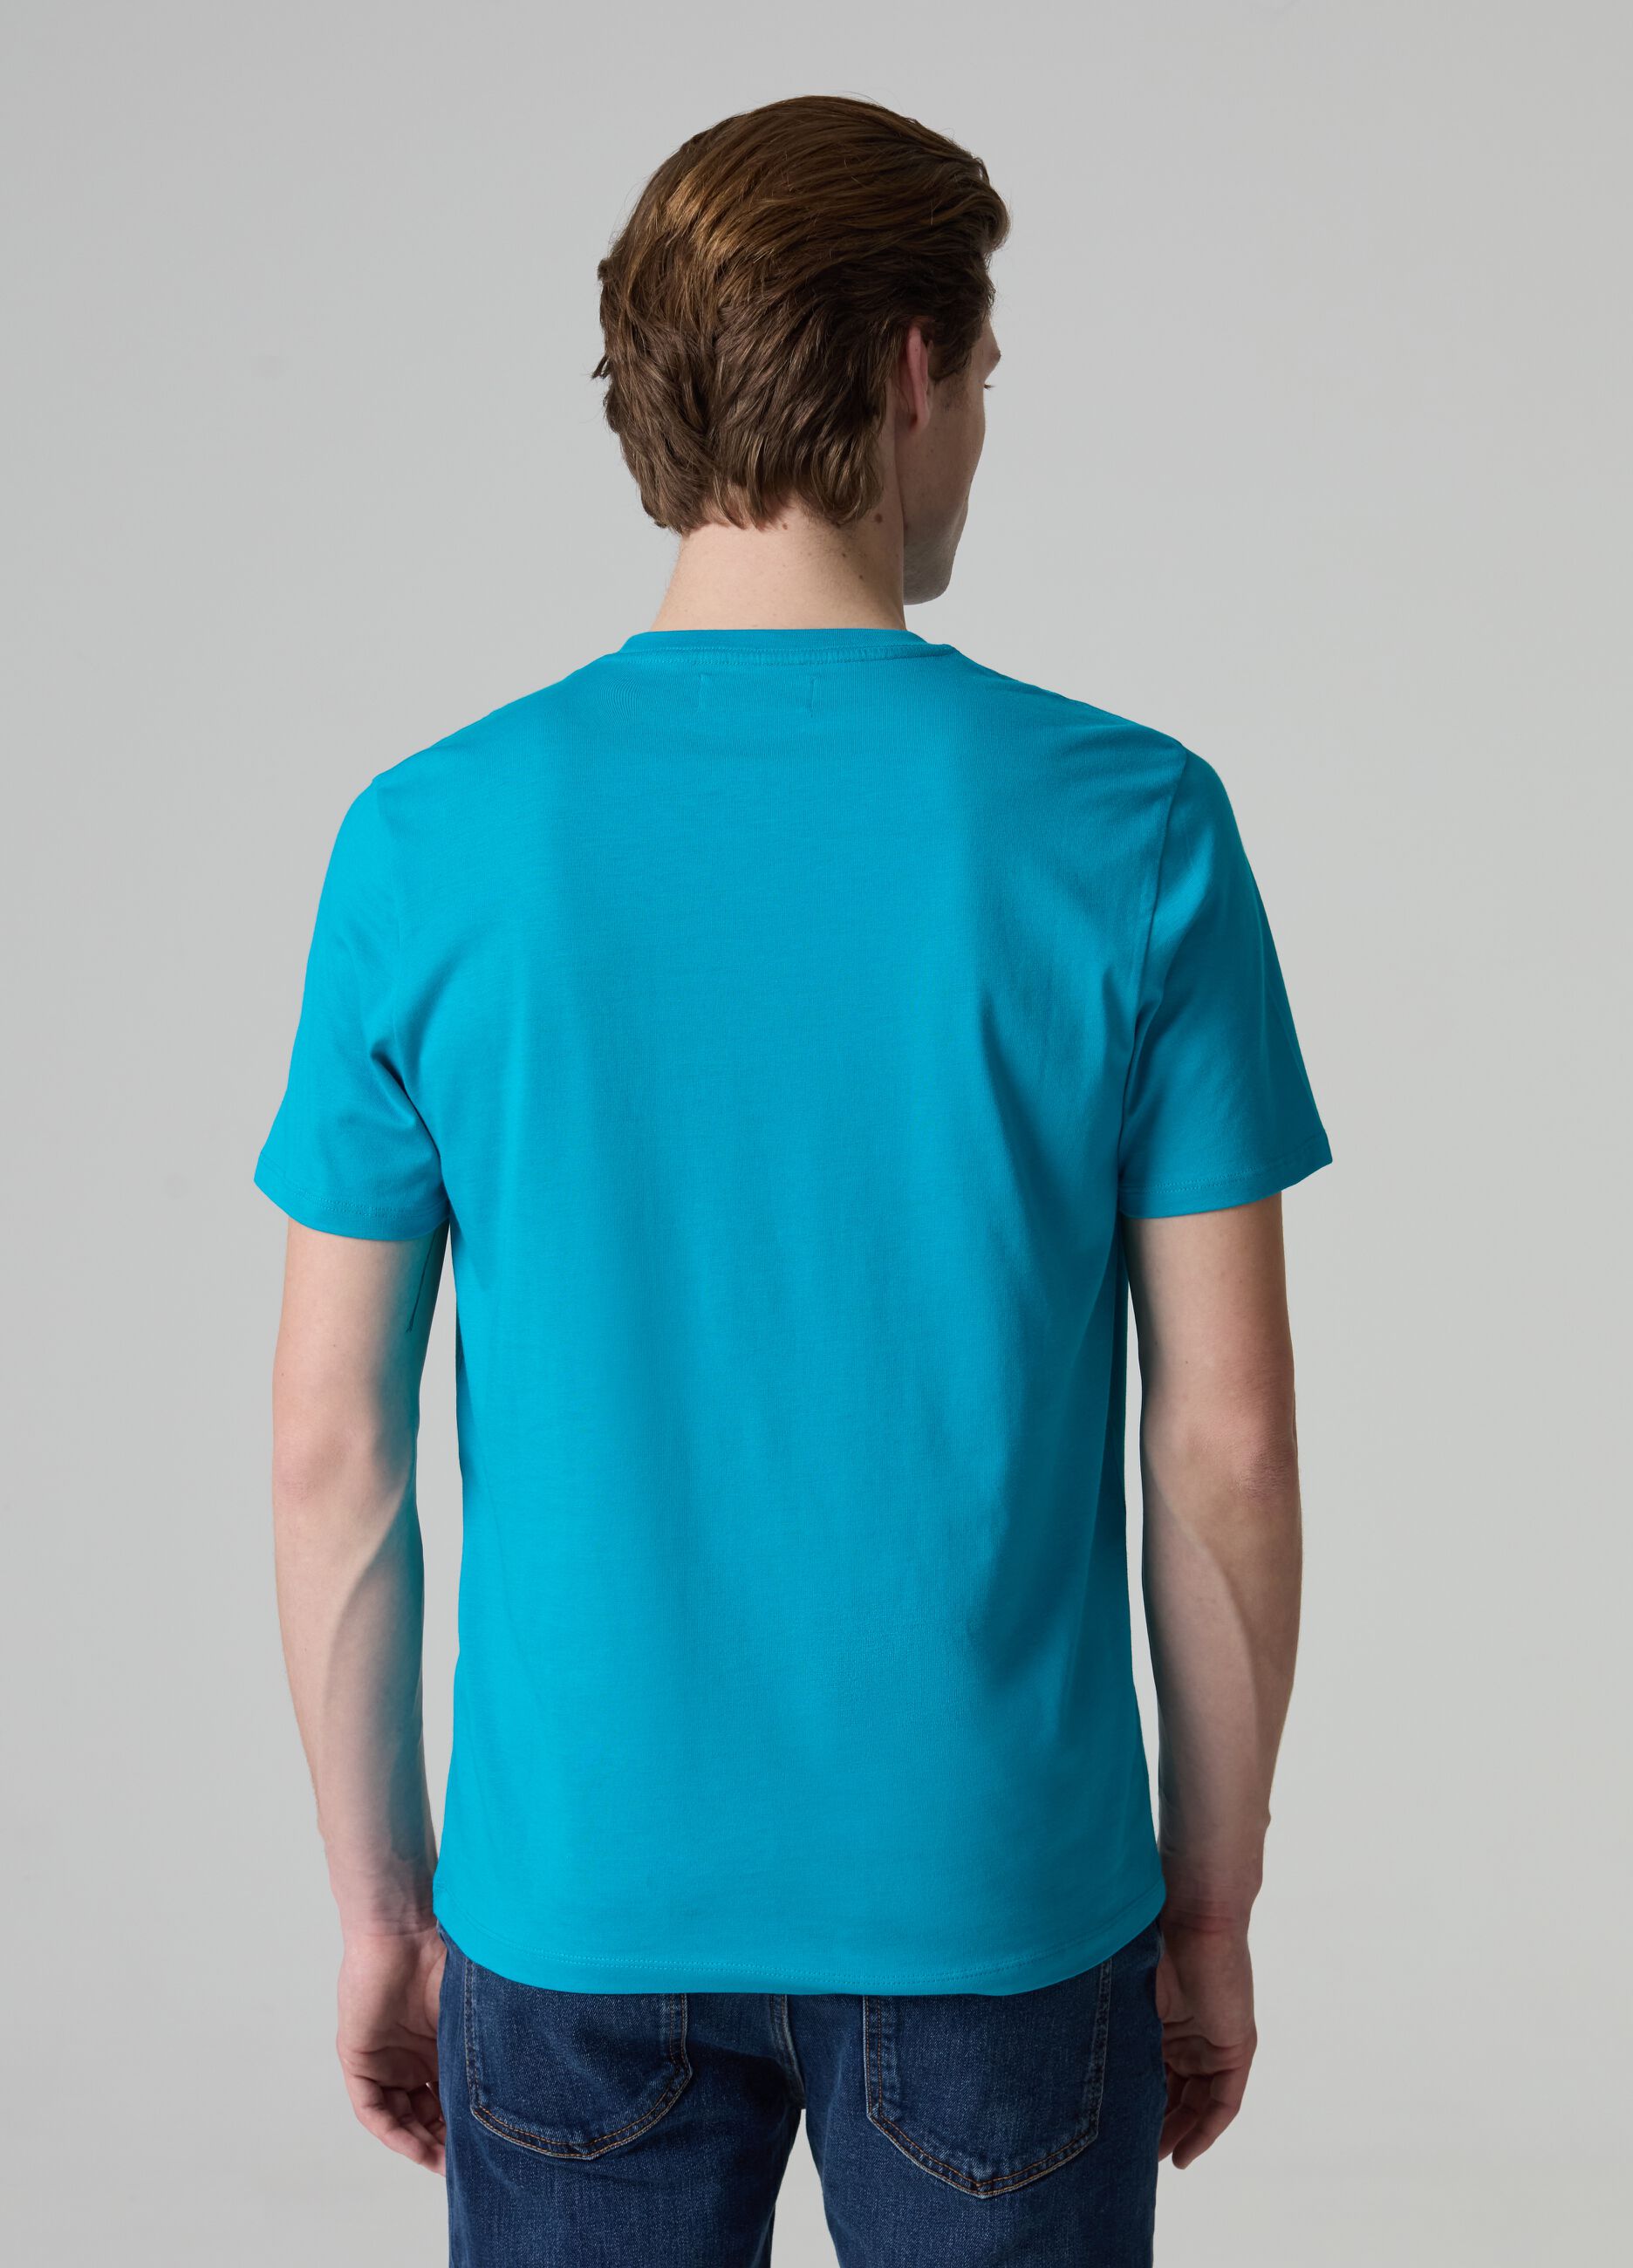 Supima cotton T-shirt with pocket